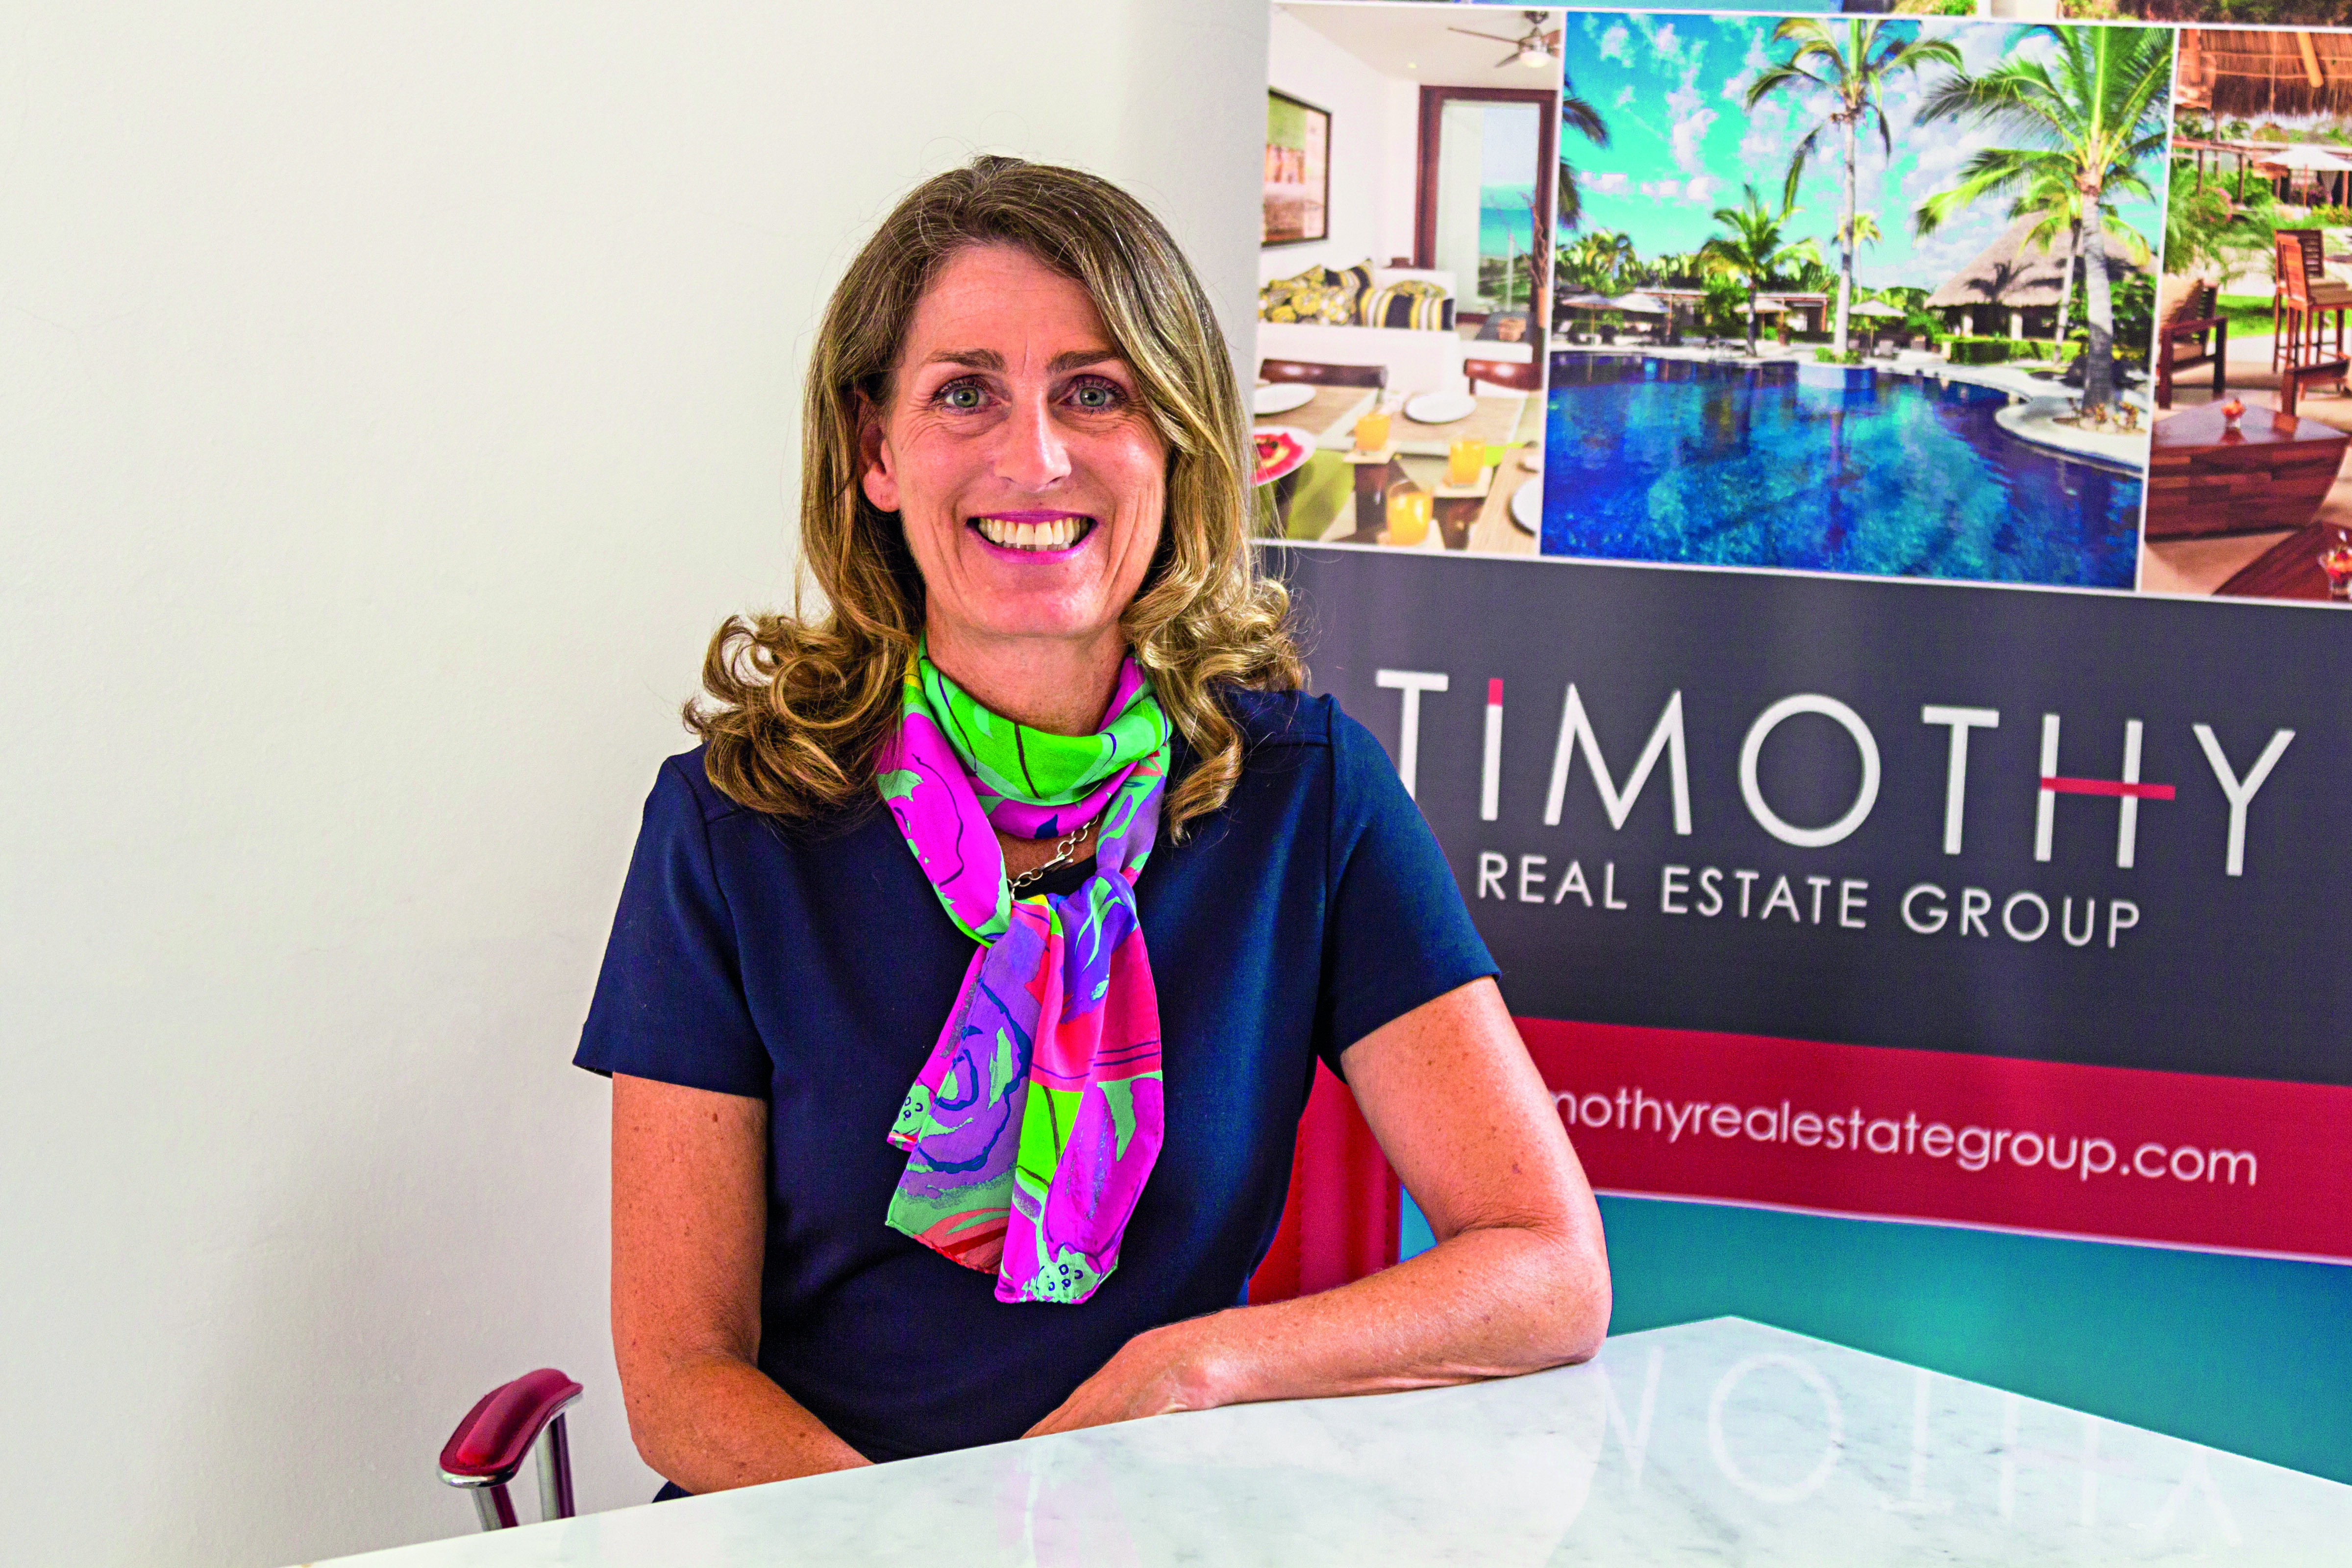 Victoria Pratt de Timothy Real Estate Group